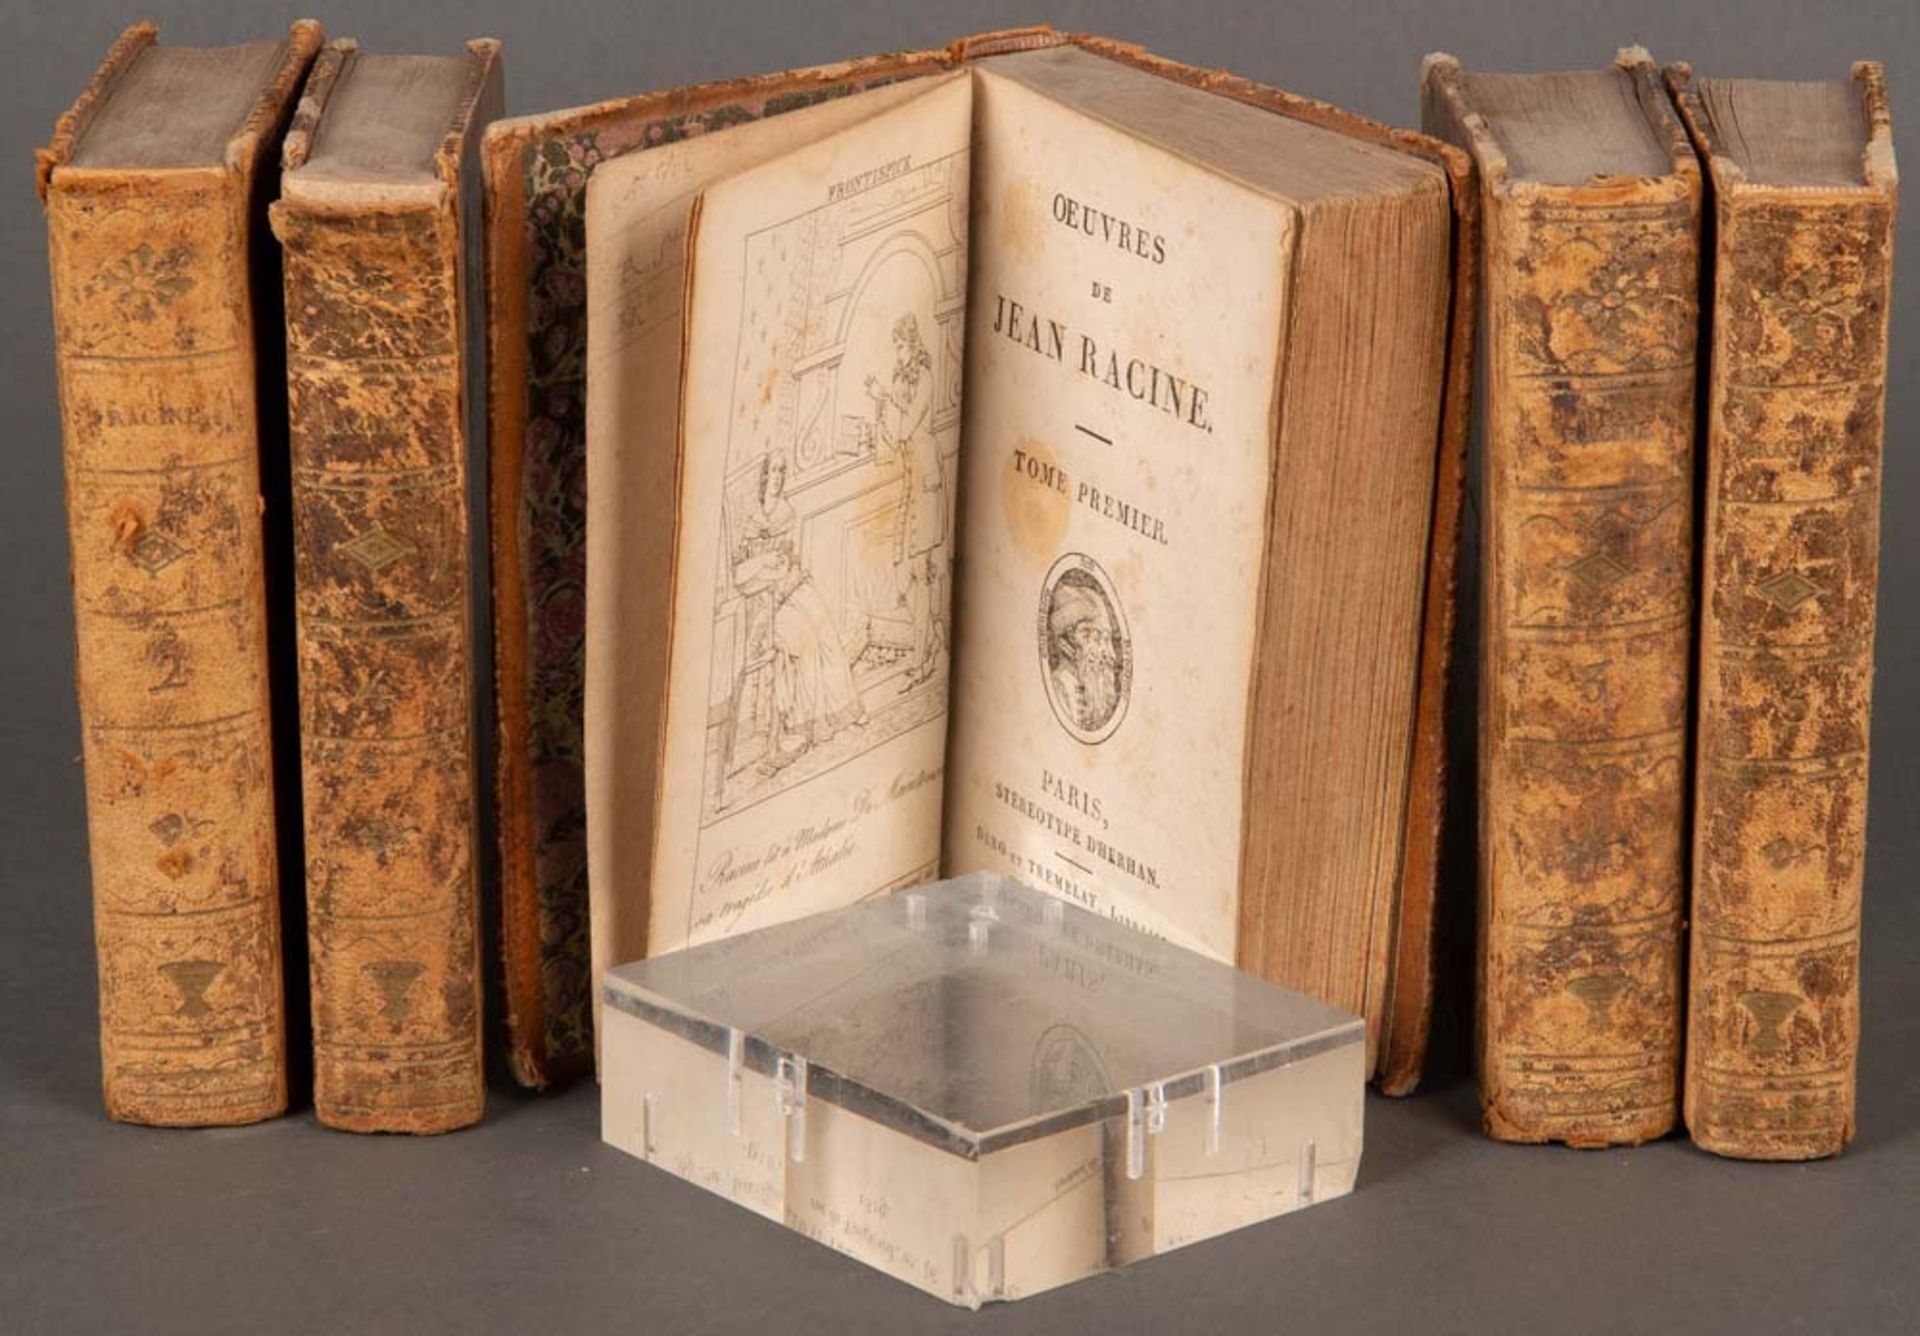 Jean Racine. „OEUVRES DE JEAN RACINE“. Fünf Bände, Tome Premier, Paris 1819.